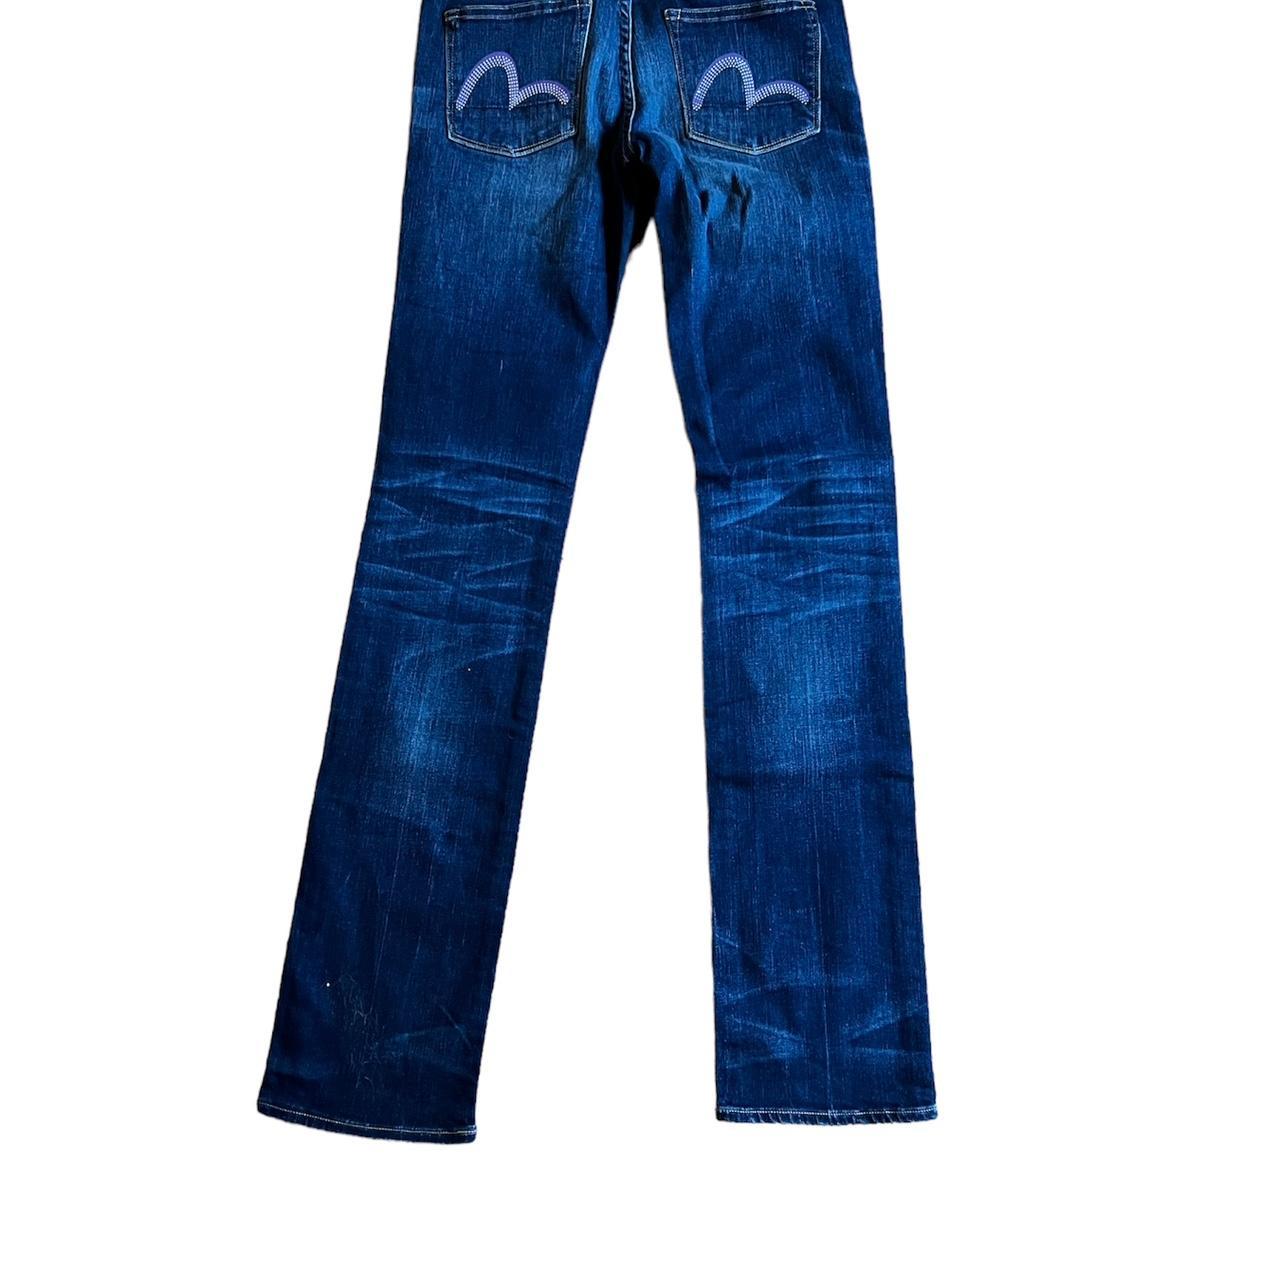 Evisu Jeans purple logo ⚡️ Waist 24 Great pair of... - Depop